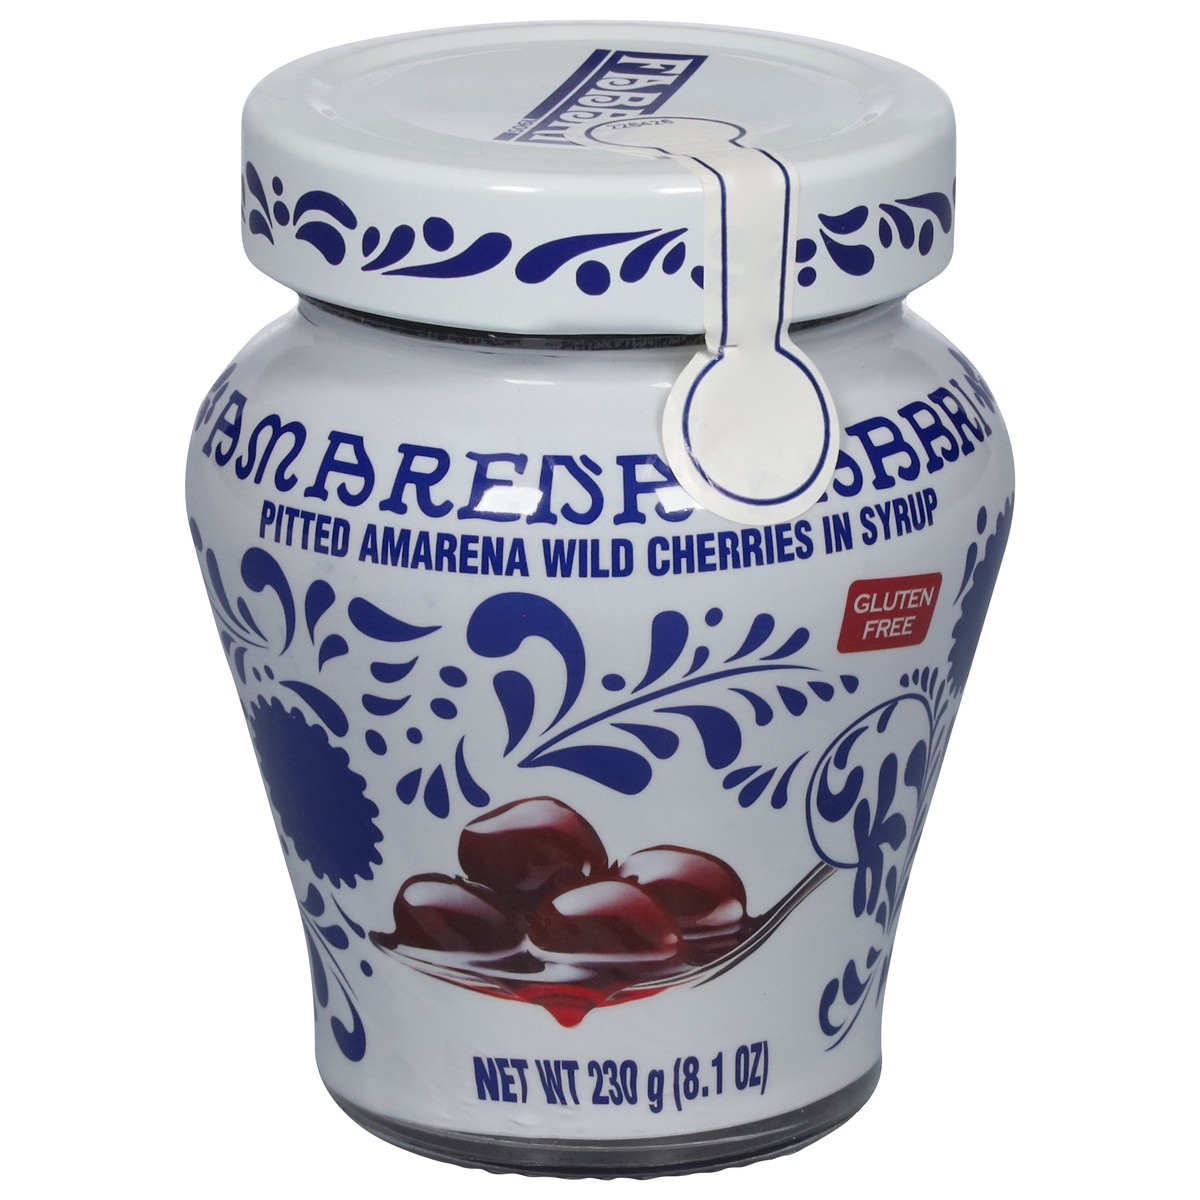 slide 14 of 14, Fabbri 1905 Pitted Amarena Wild Cherries in Syrup 8.1 oz, 8 oz